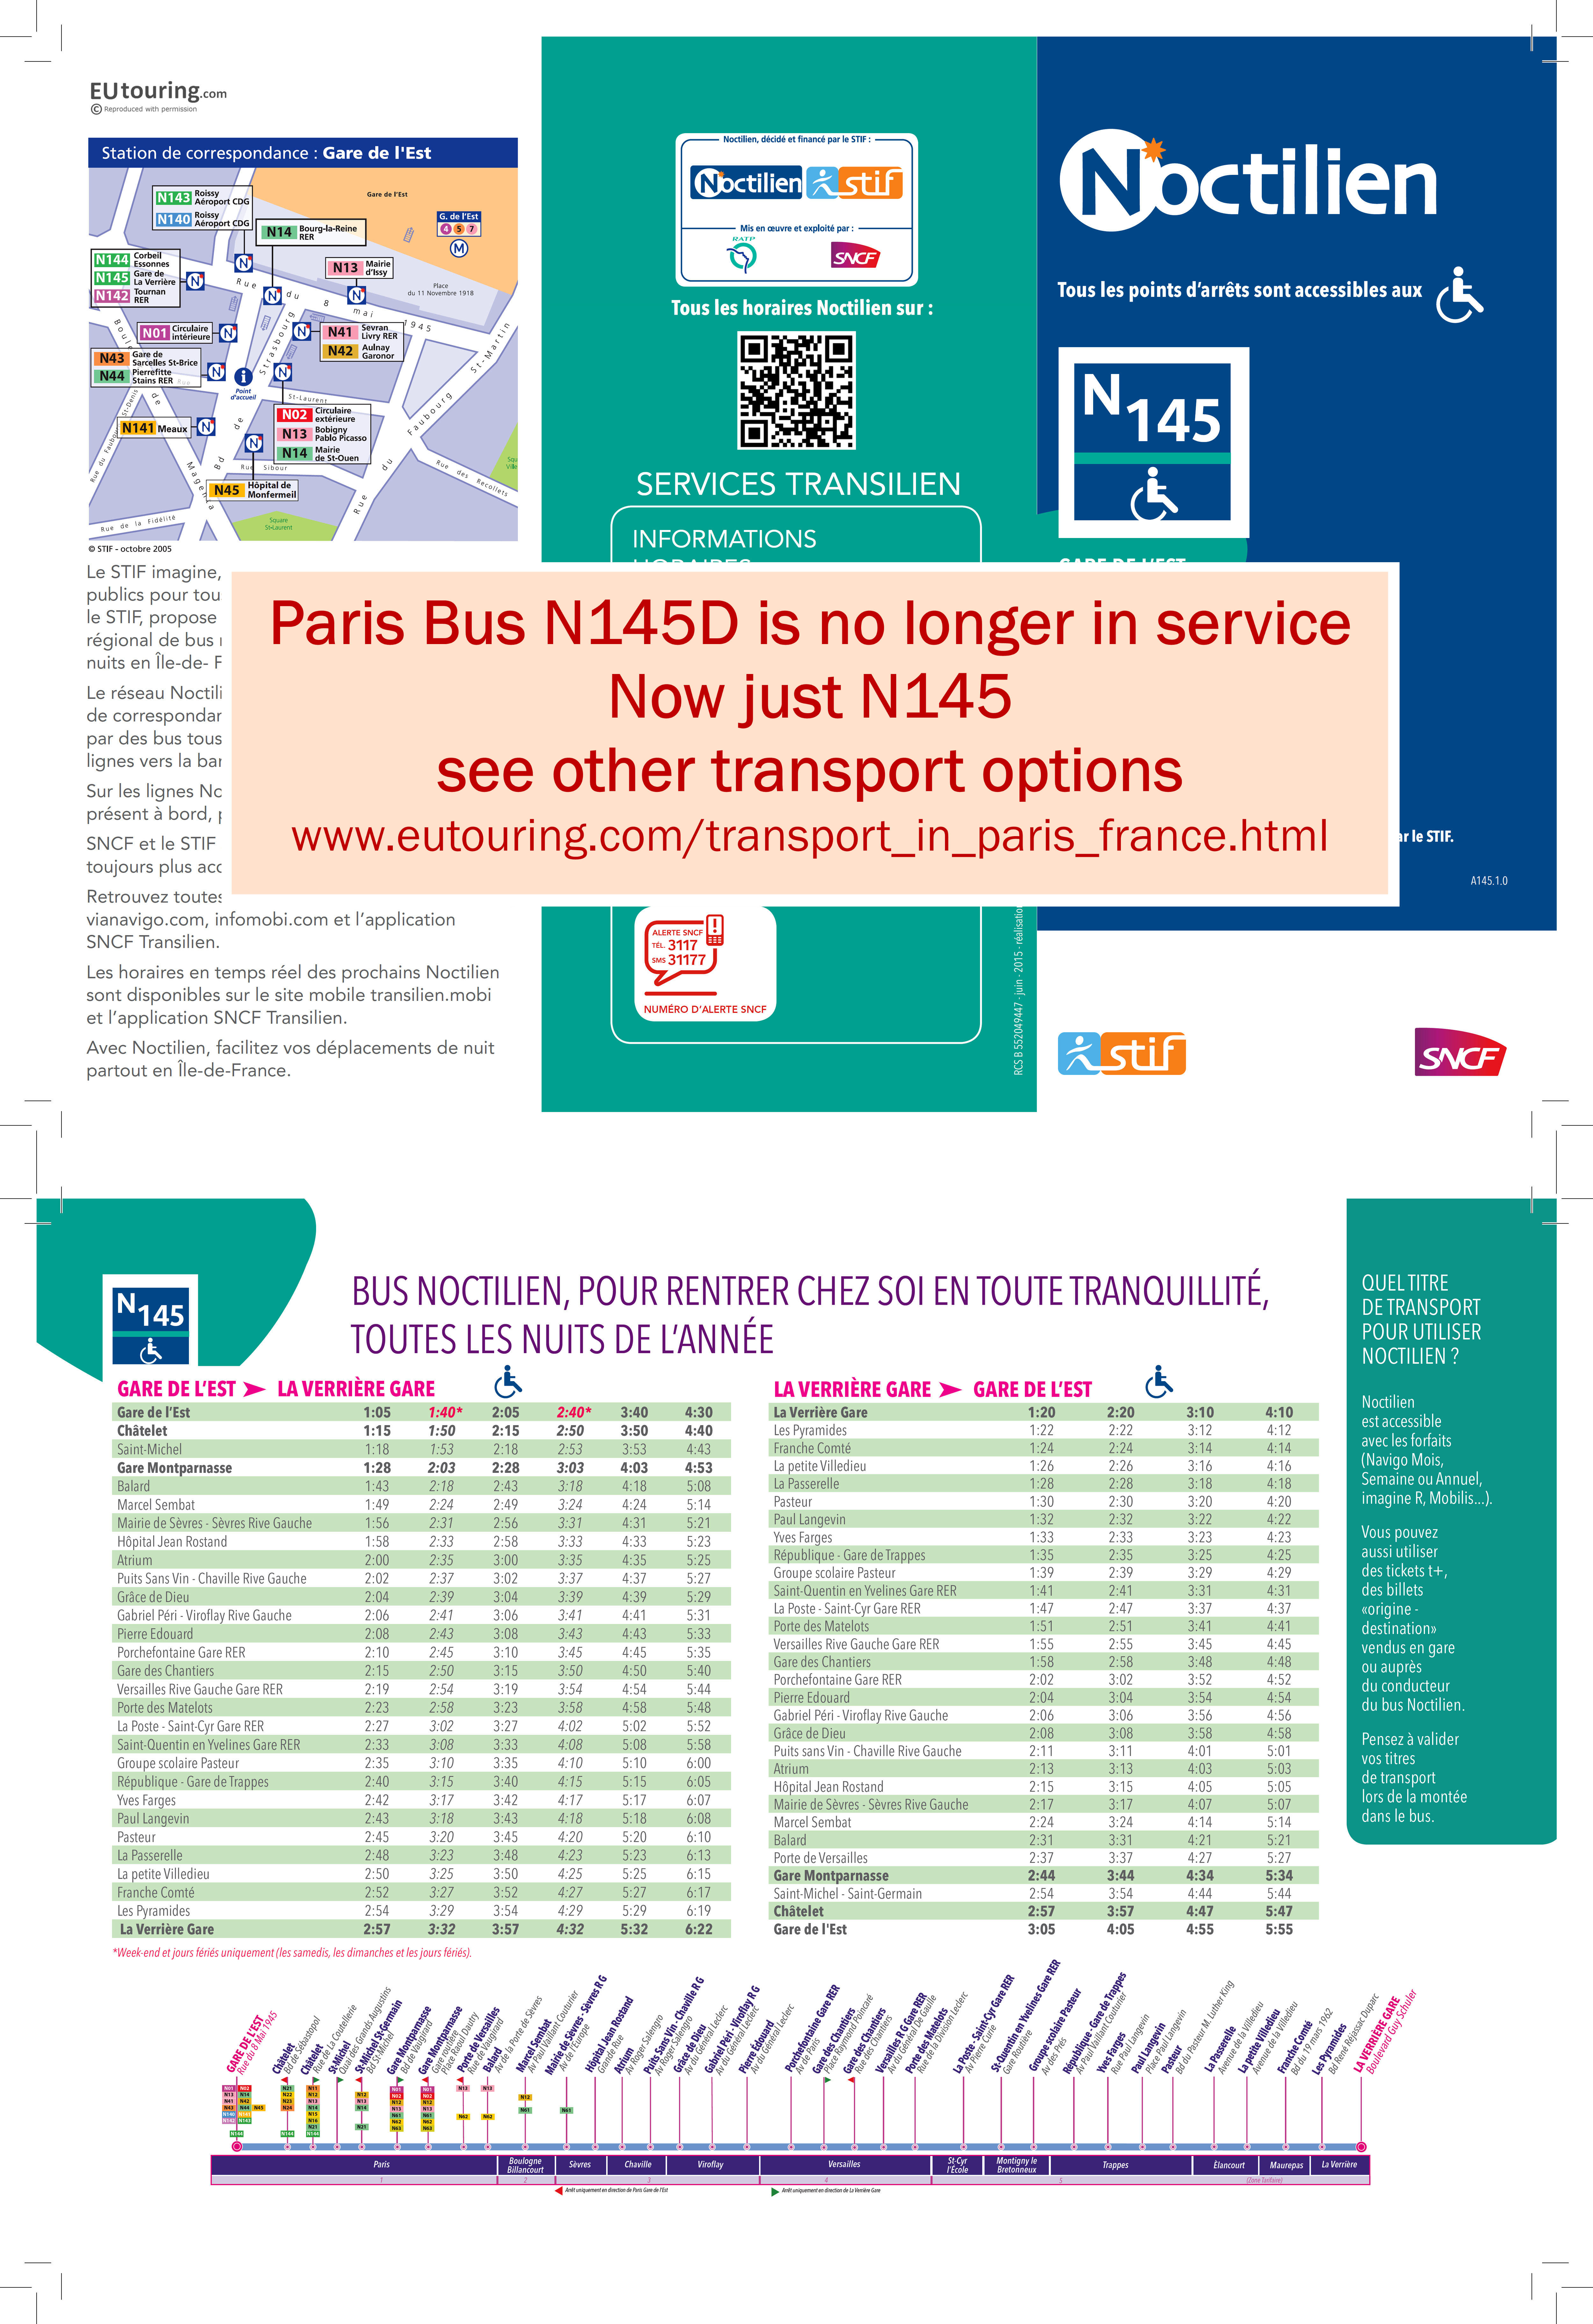 Noctilien bus maps for Paris night bus lines N140 to N149